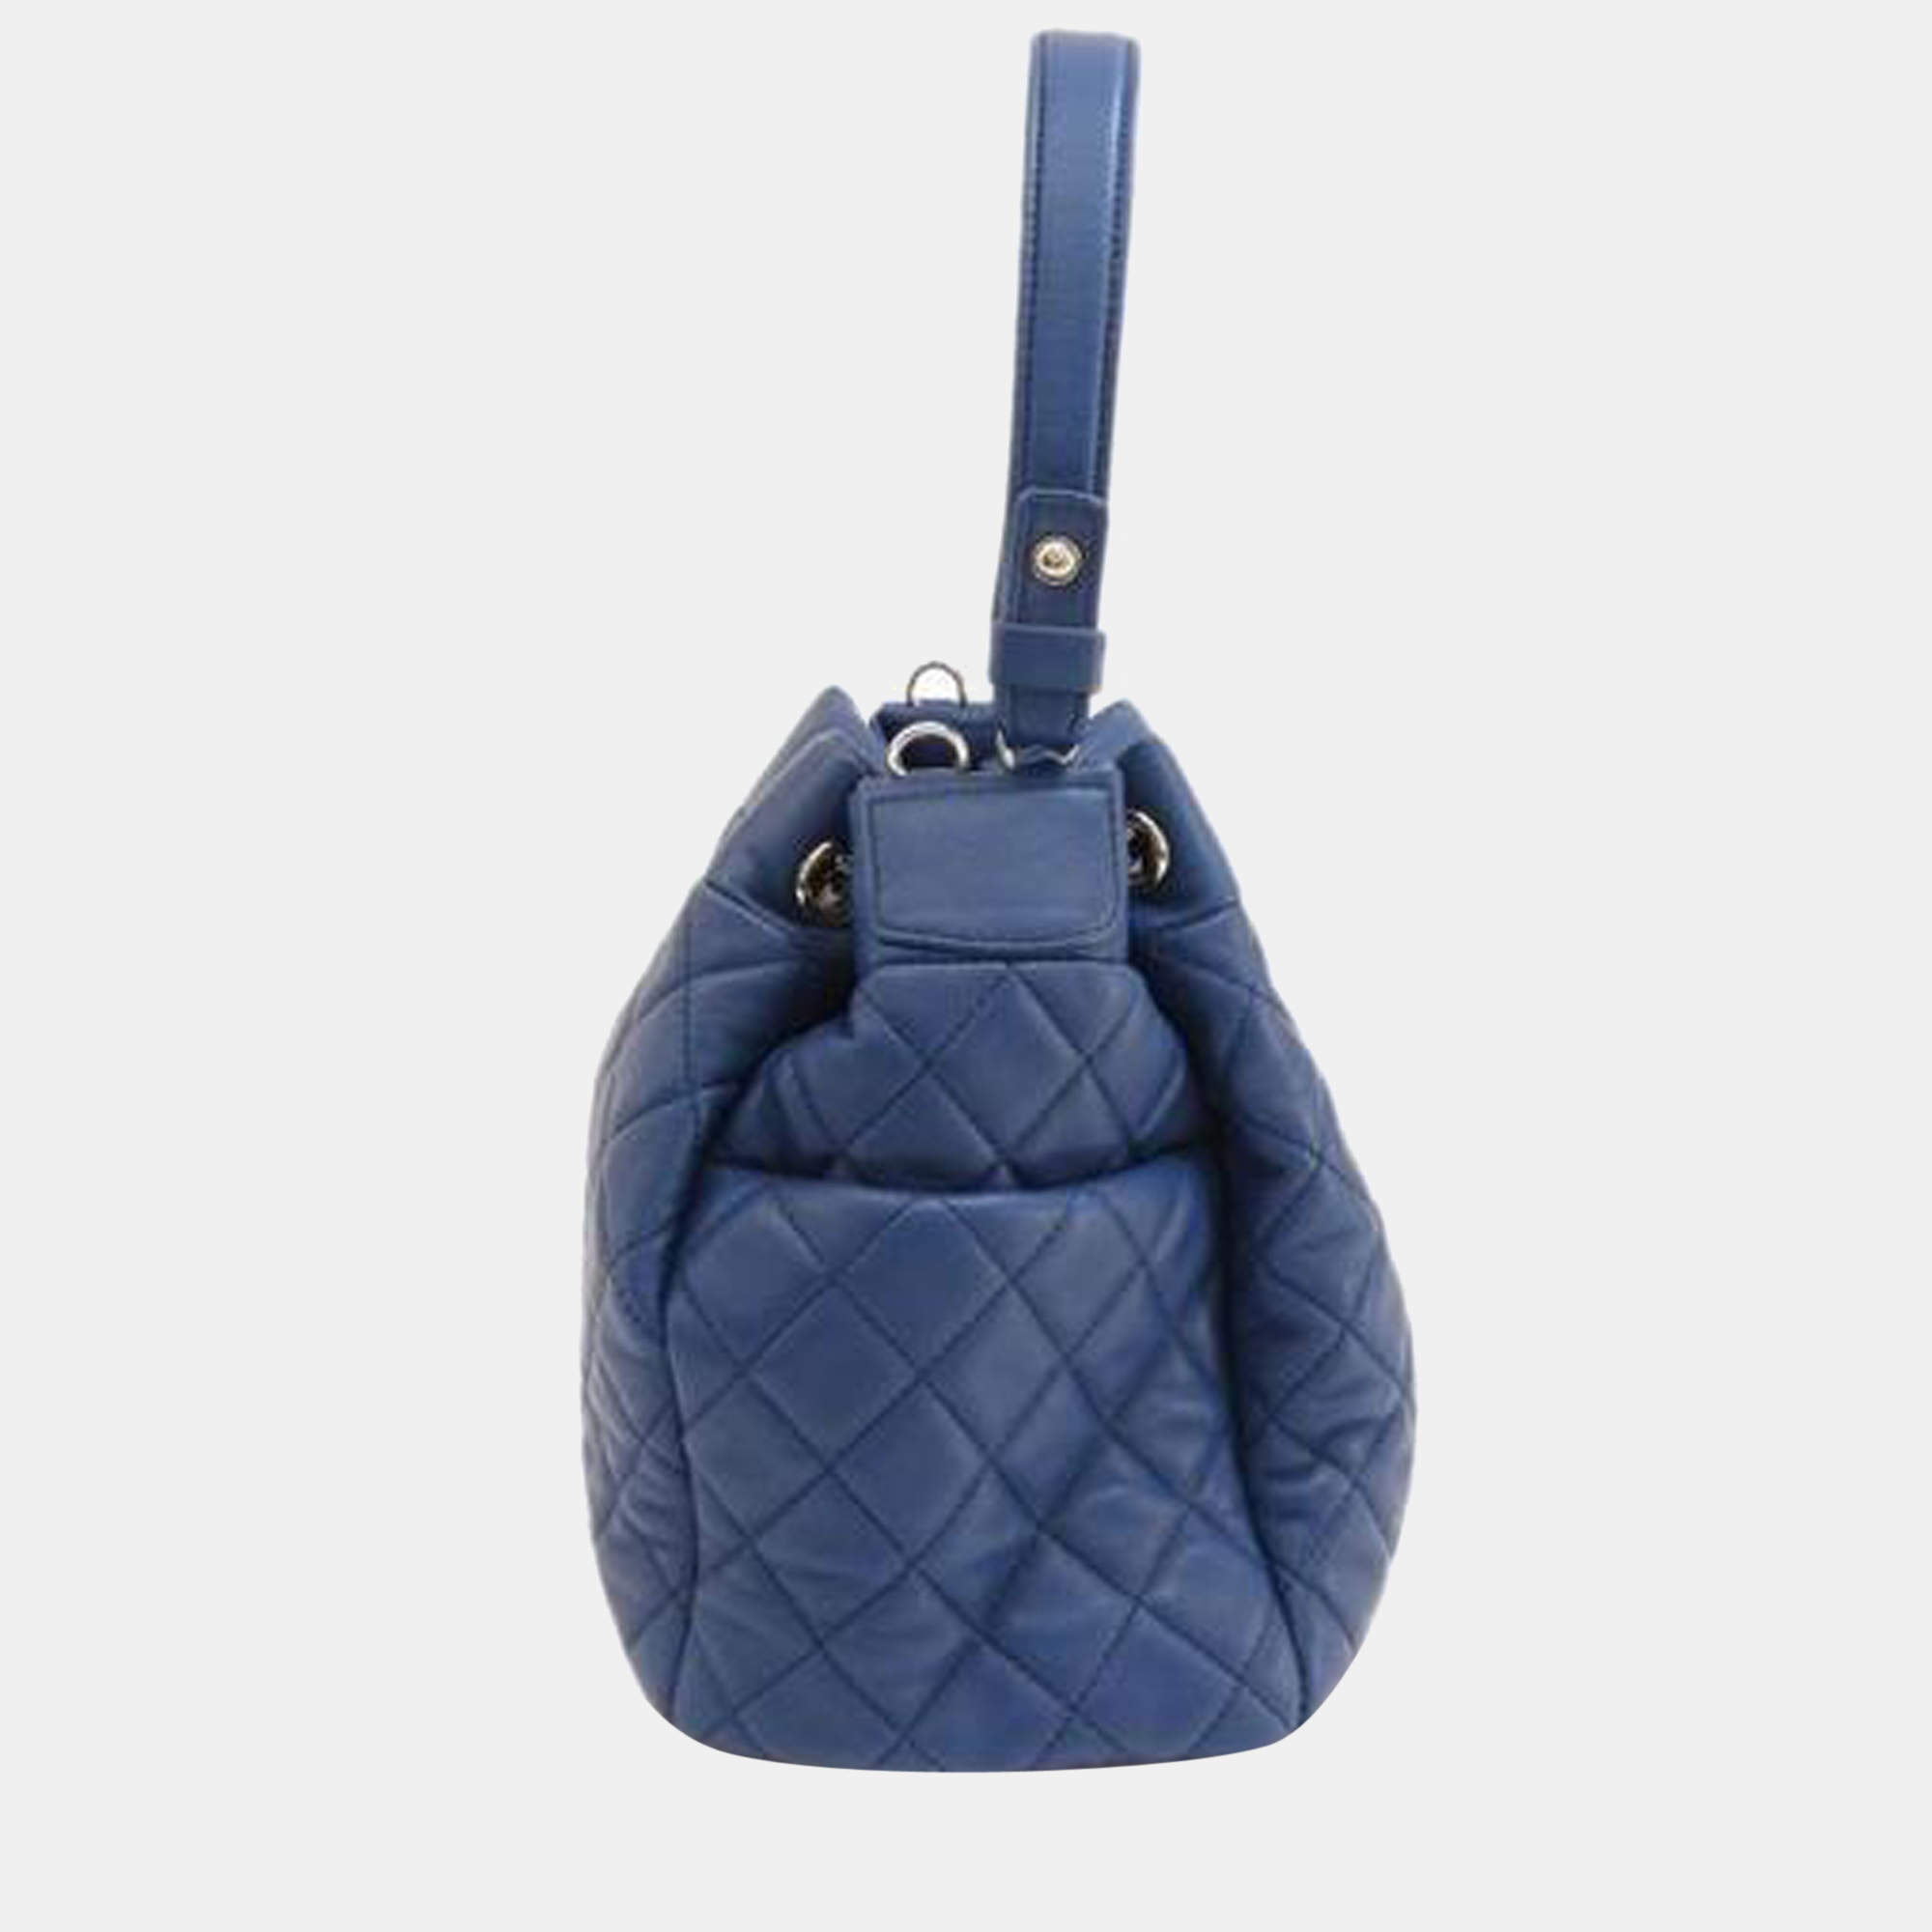 Chanel Blue Lambskin Leather Drawstring CC Bucket Bag Chanel